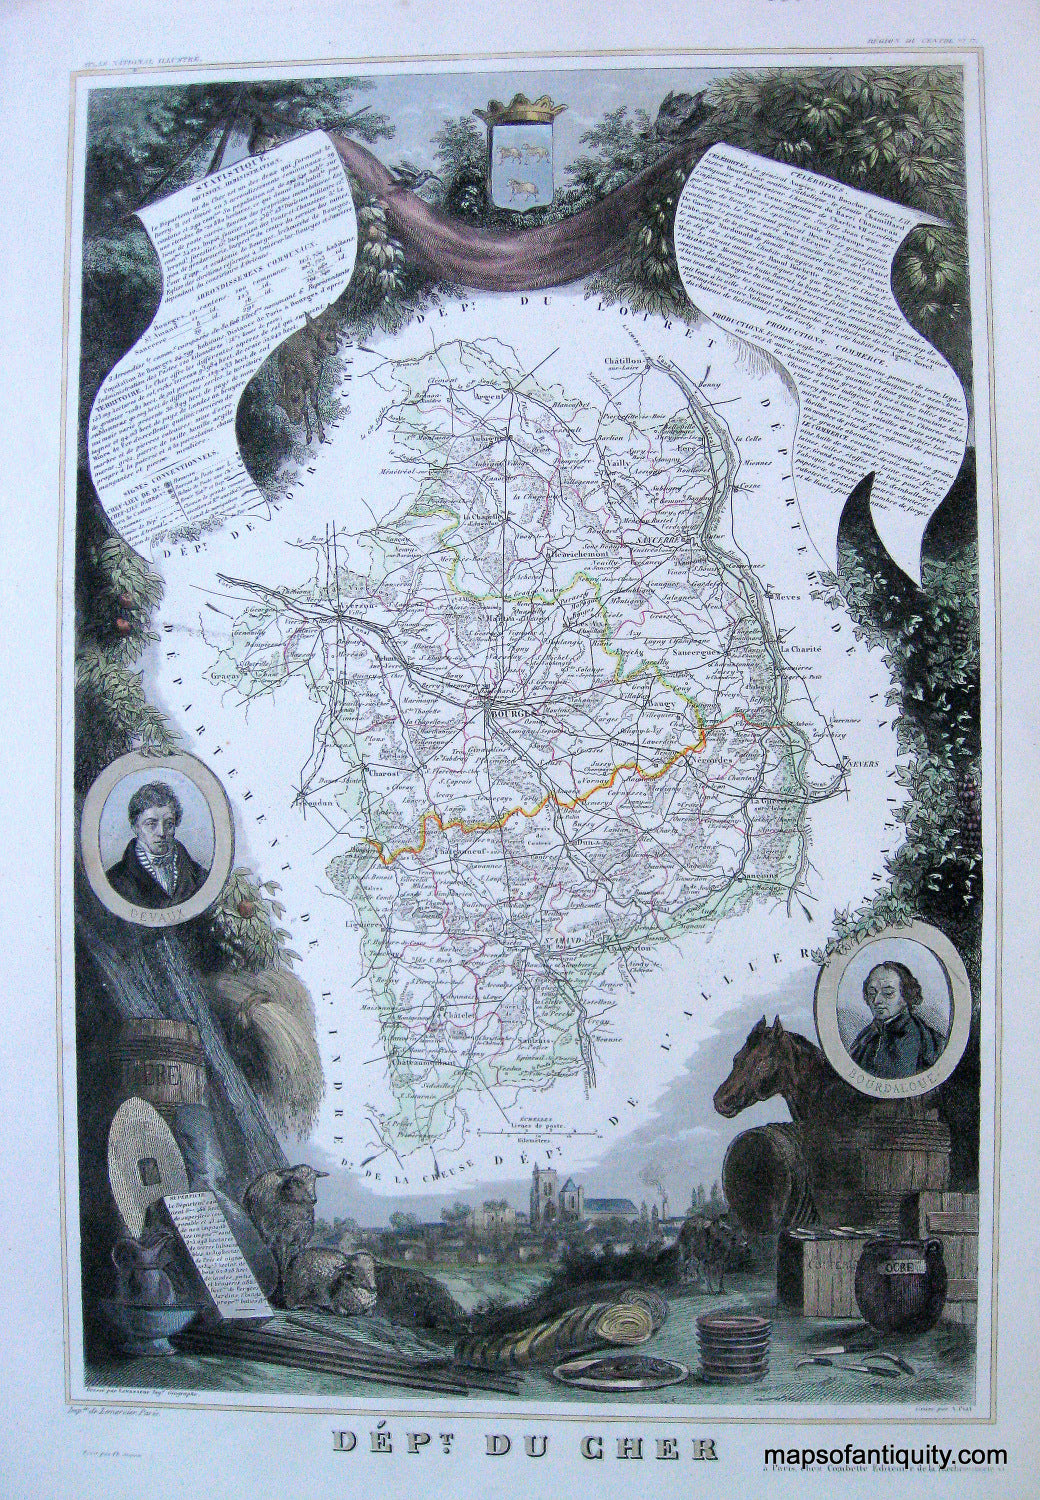 Antique-Hand-Colored-Map-Dept.-du-Cher-France-Europe-France-1851-Levasseur-Maps-Of-Antiquity